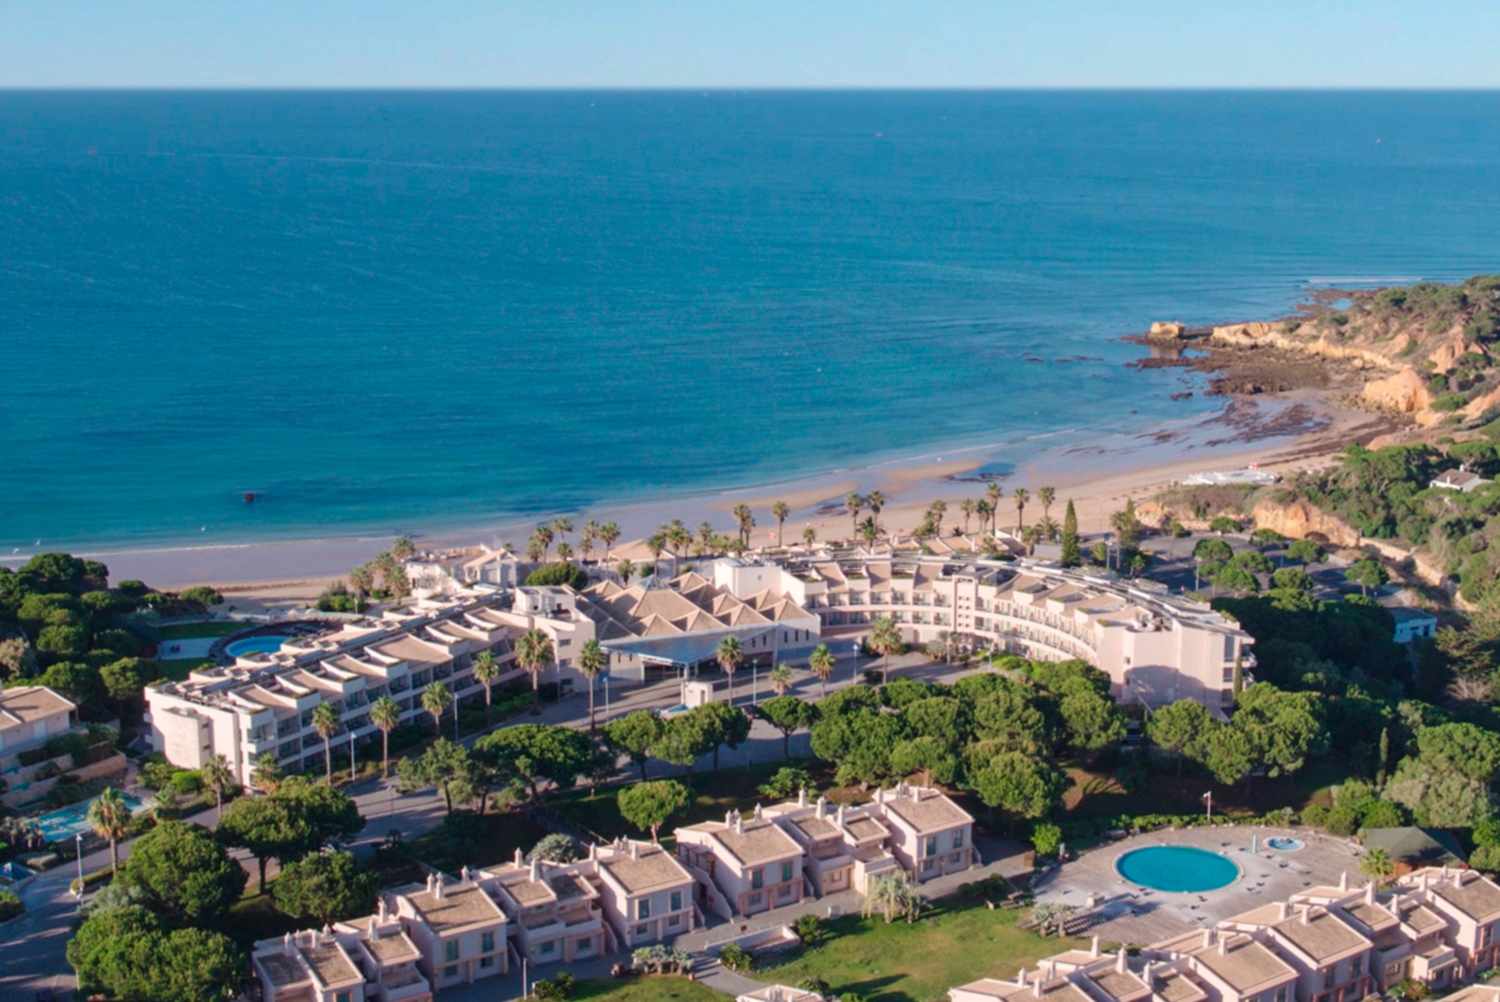 Grande Real Santa Eulalia Resort & Hotel Spa, Albufeira, Algarve, Portugal